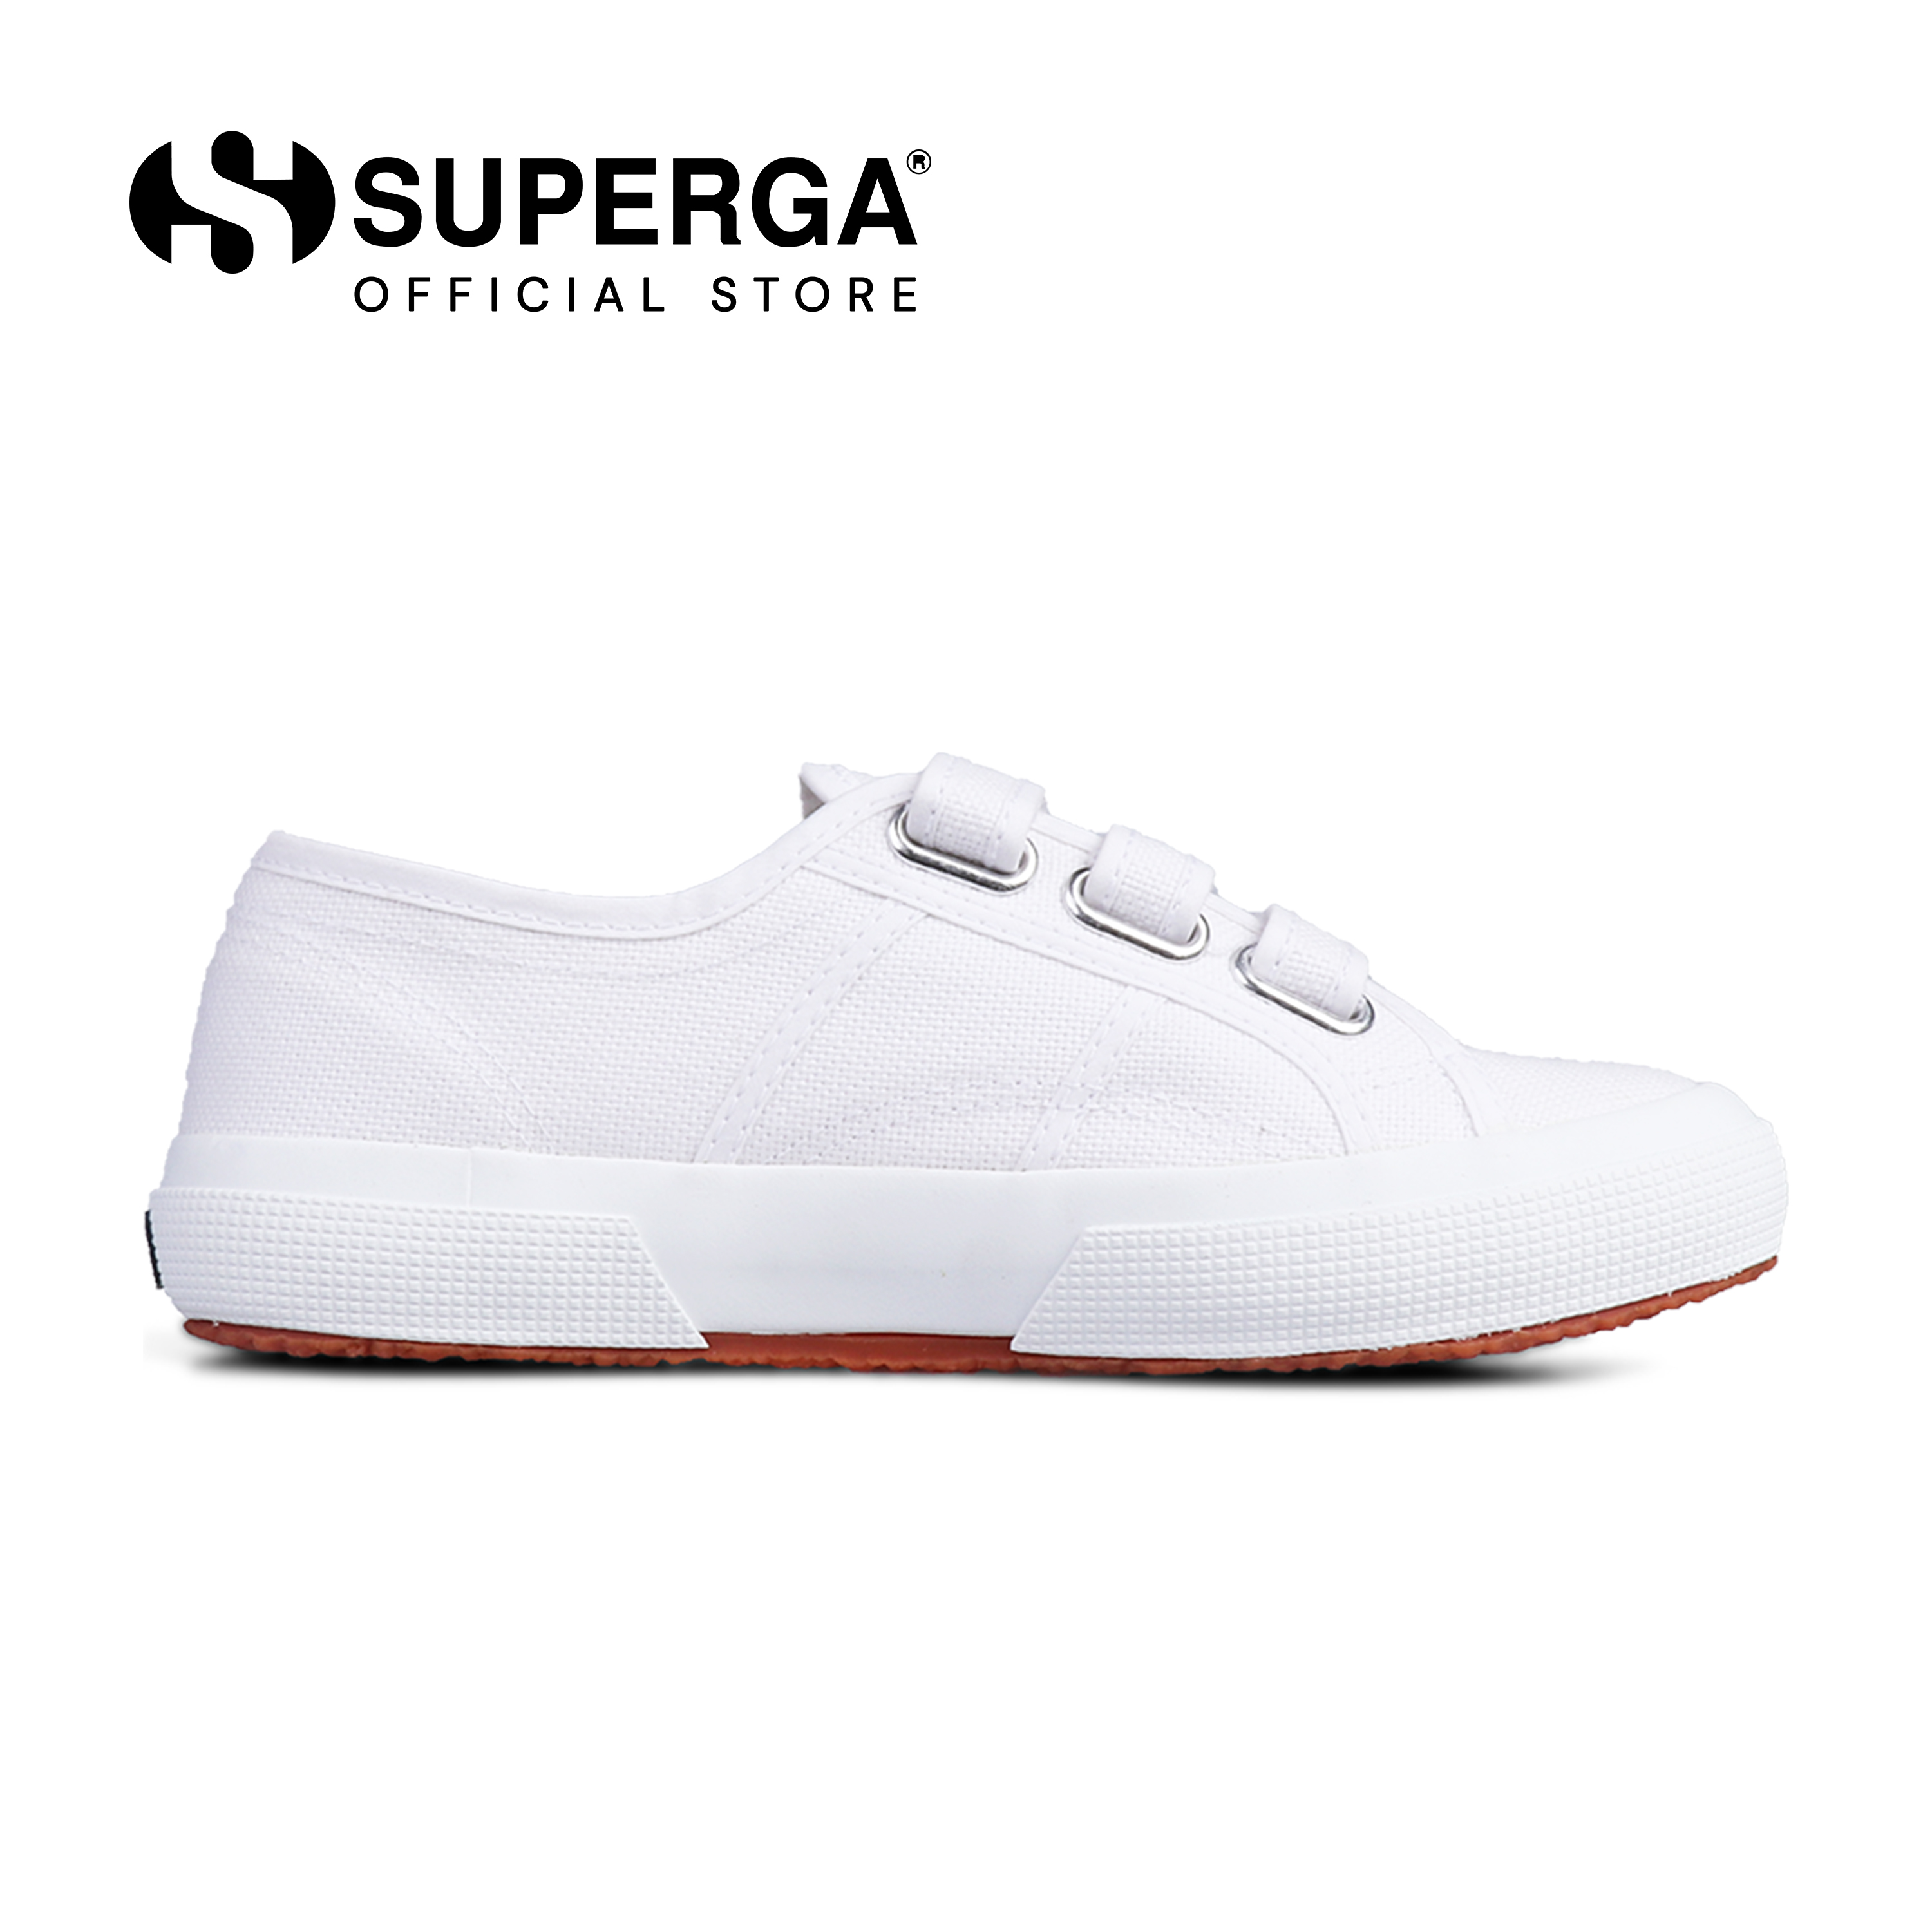 Superga Strap in White: Buy sell online 